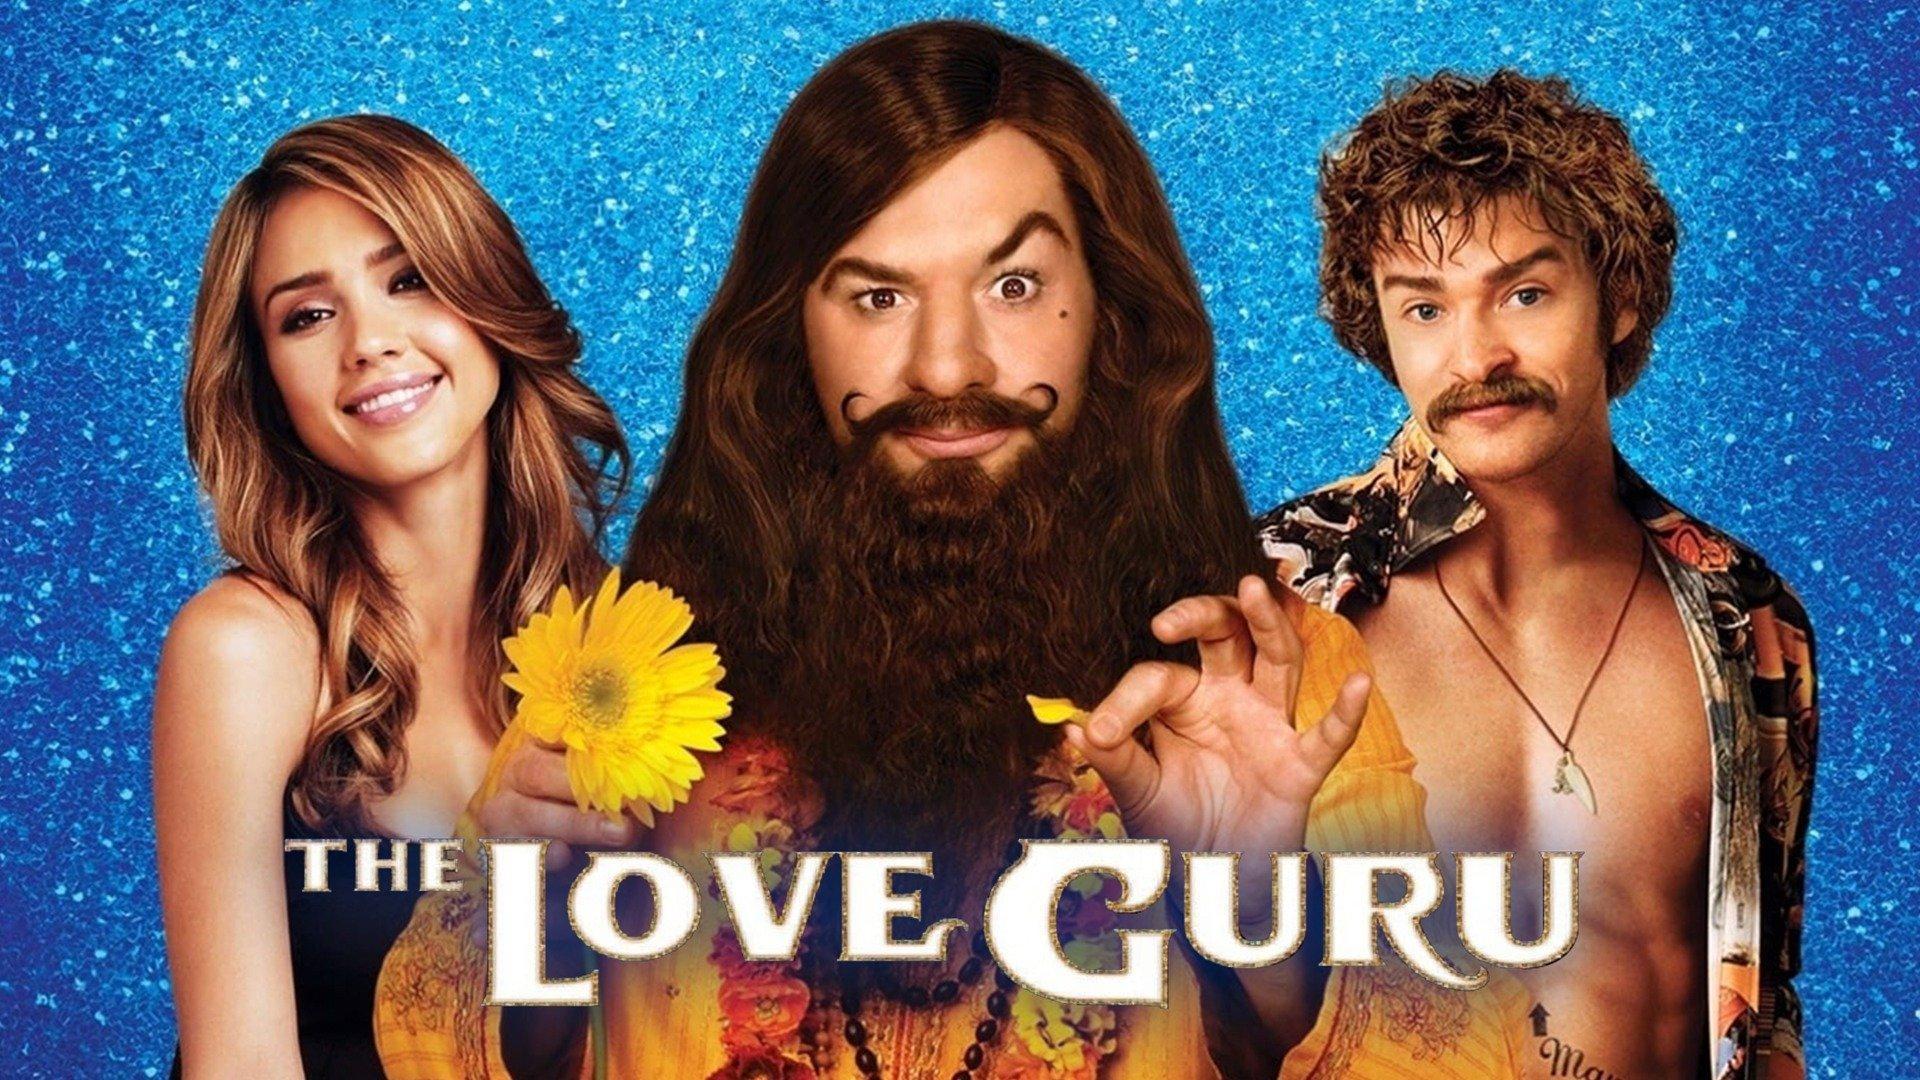 Watch The Love Guru Streaming Online on Philo (Free Trial)